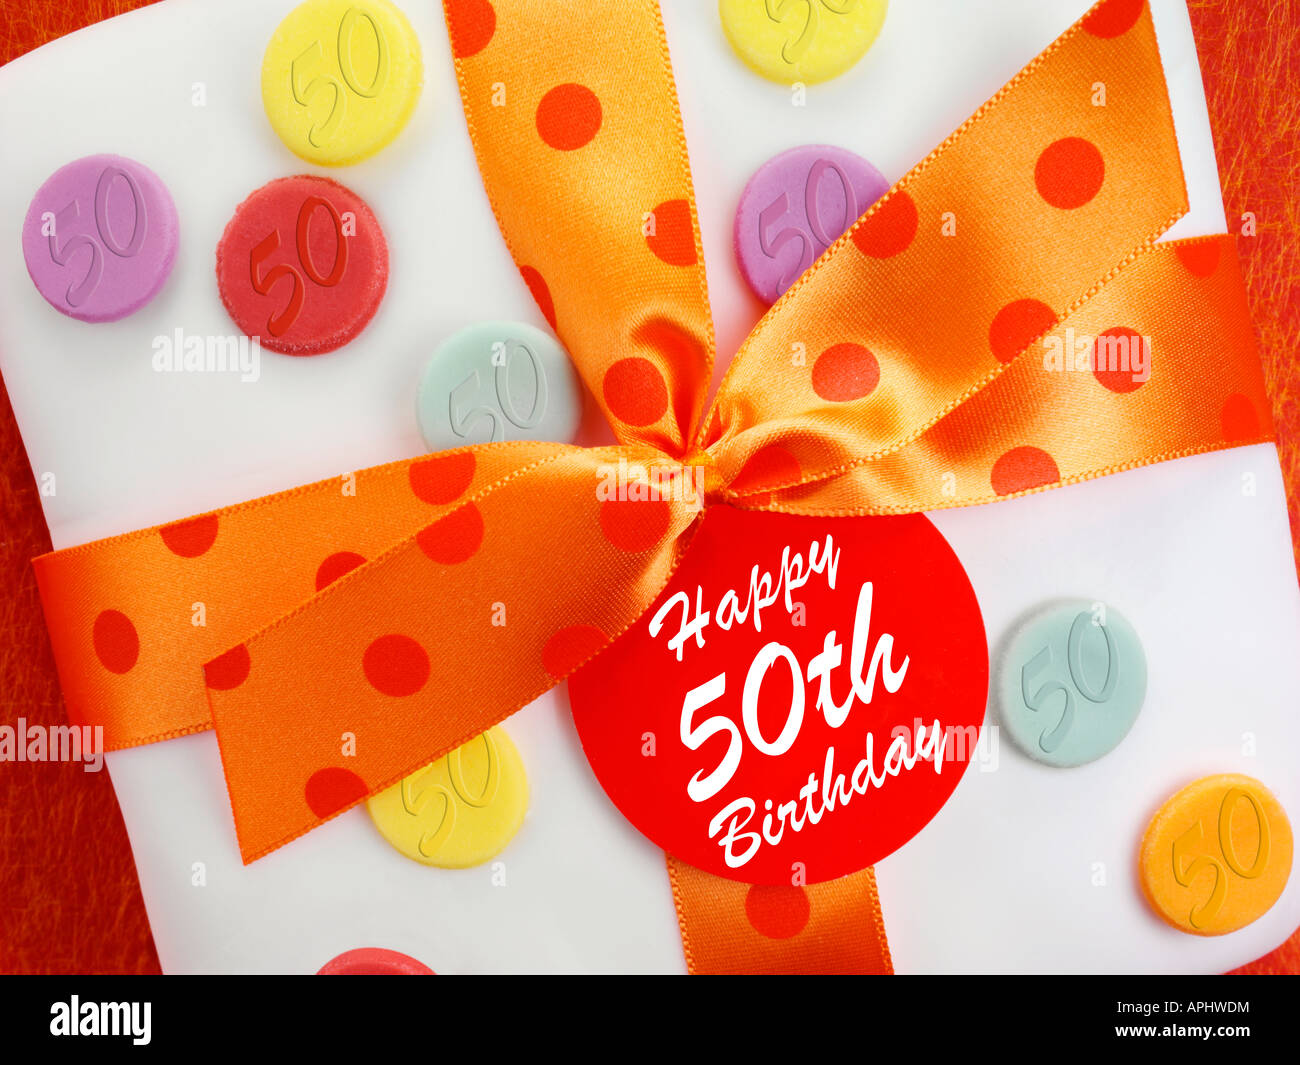 50th BIRTHDAY CAKE Stock Photo